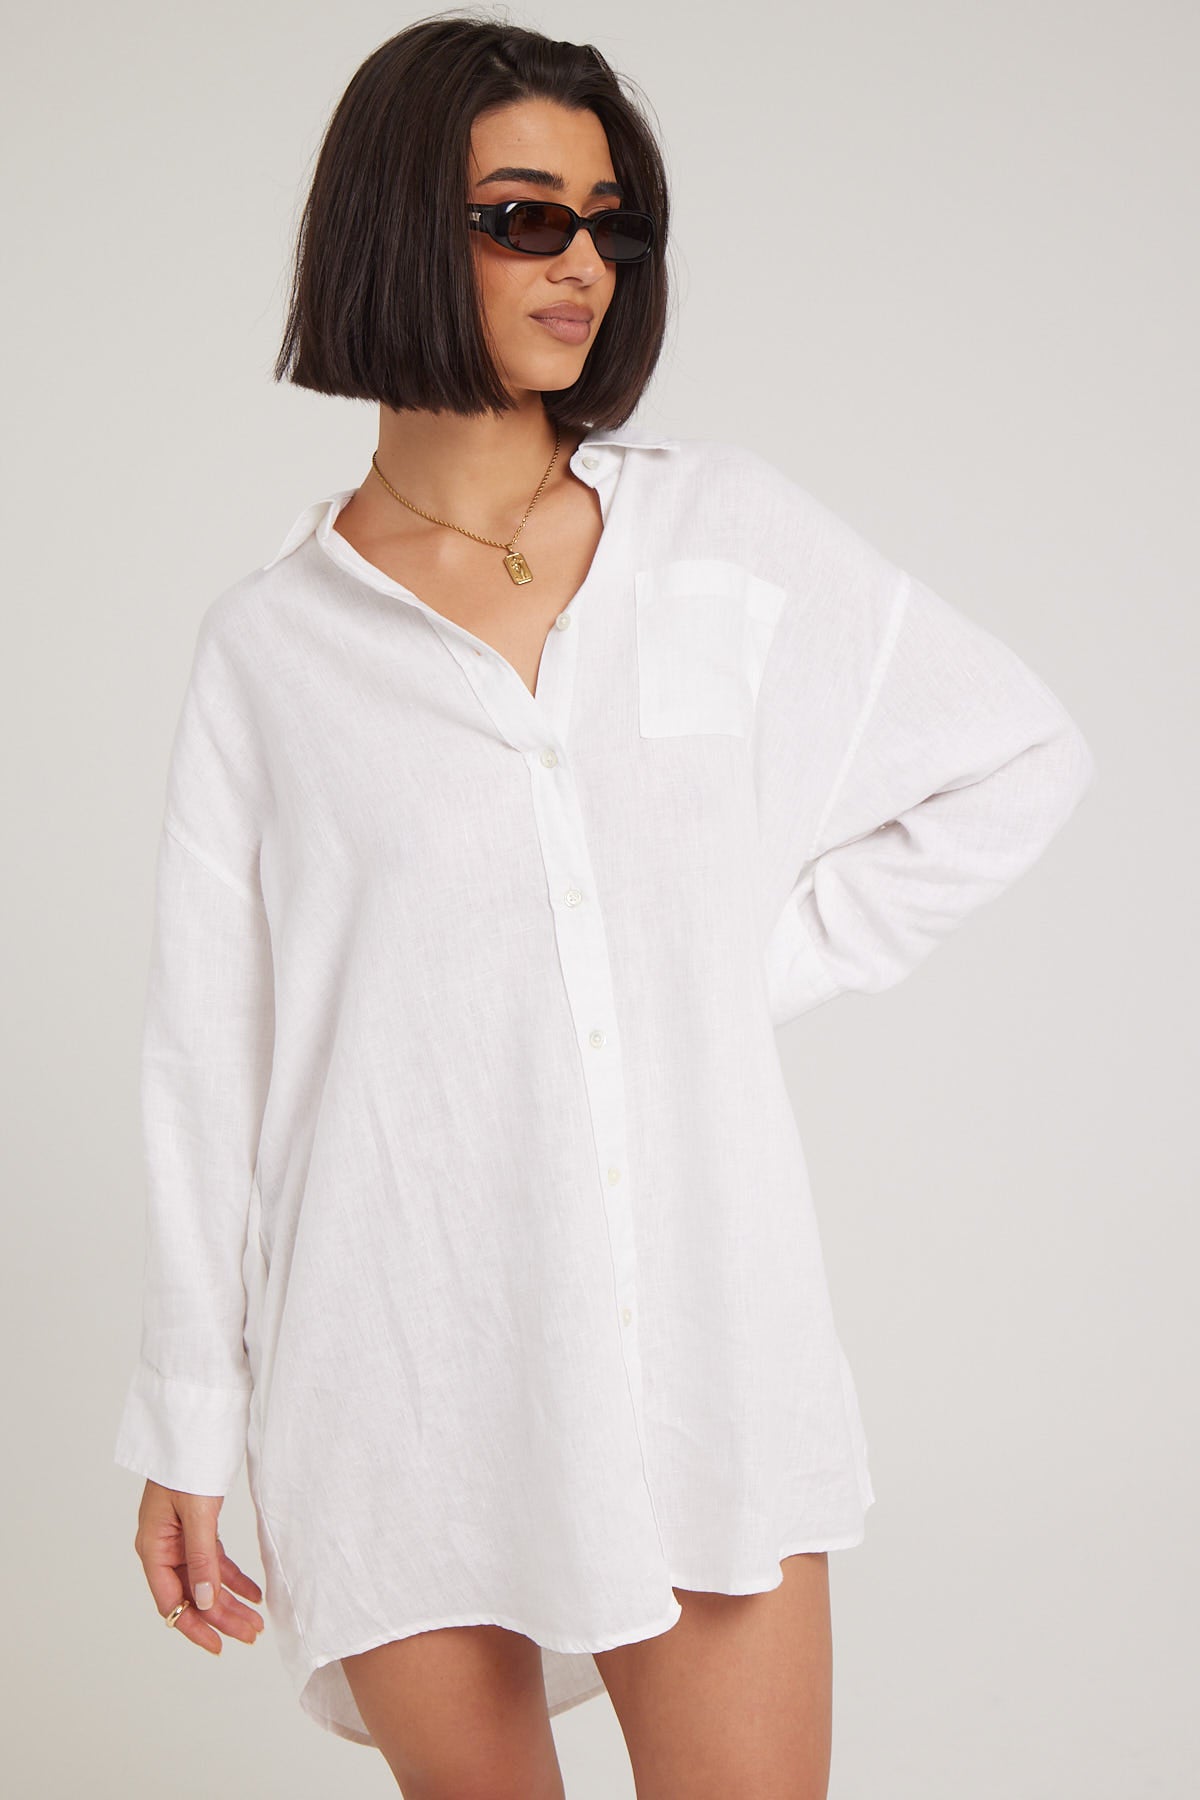 Academy Brand Hampton Linen Dress White – Universal Store